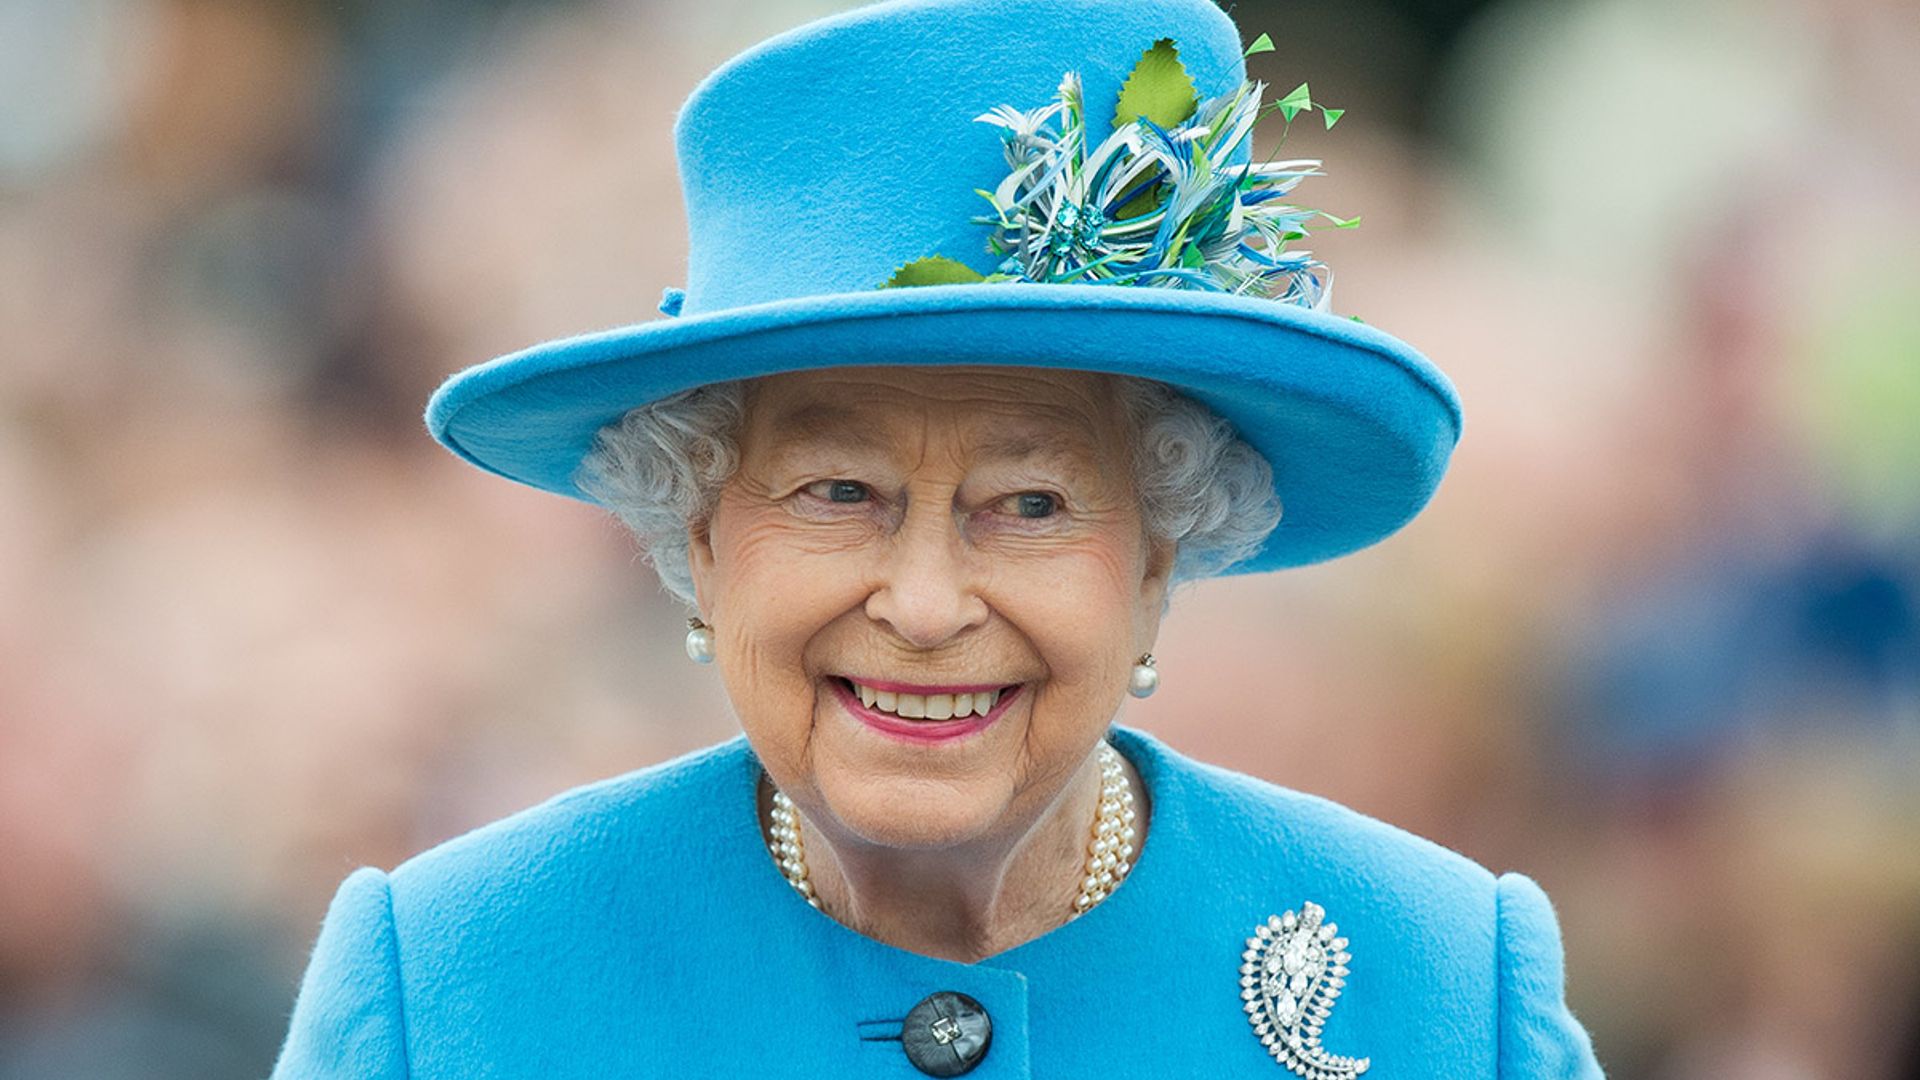 The Queen marks momentous family anniversary in midst of coronavirus lockdown